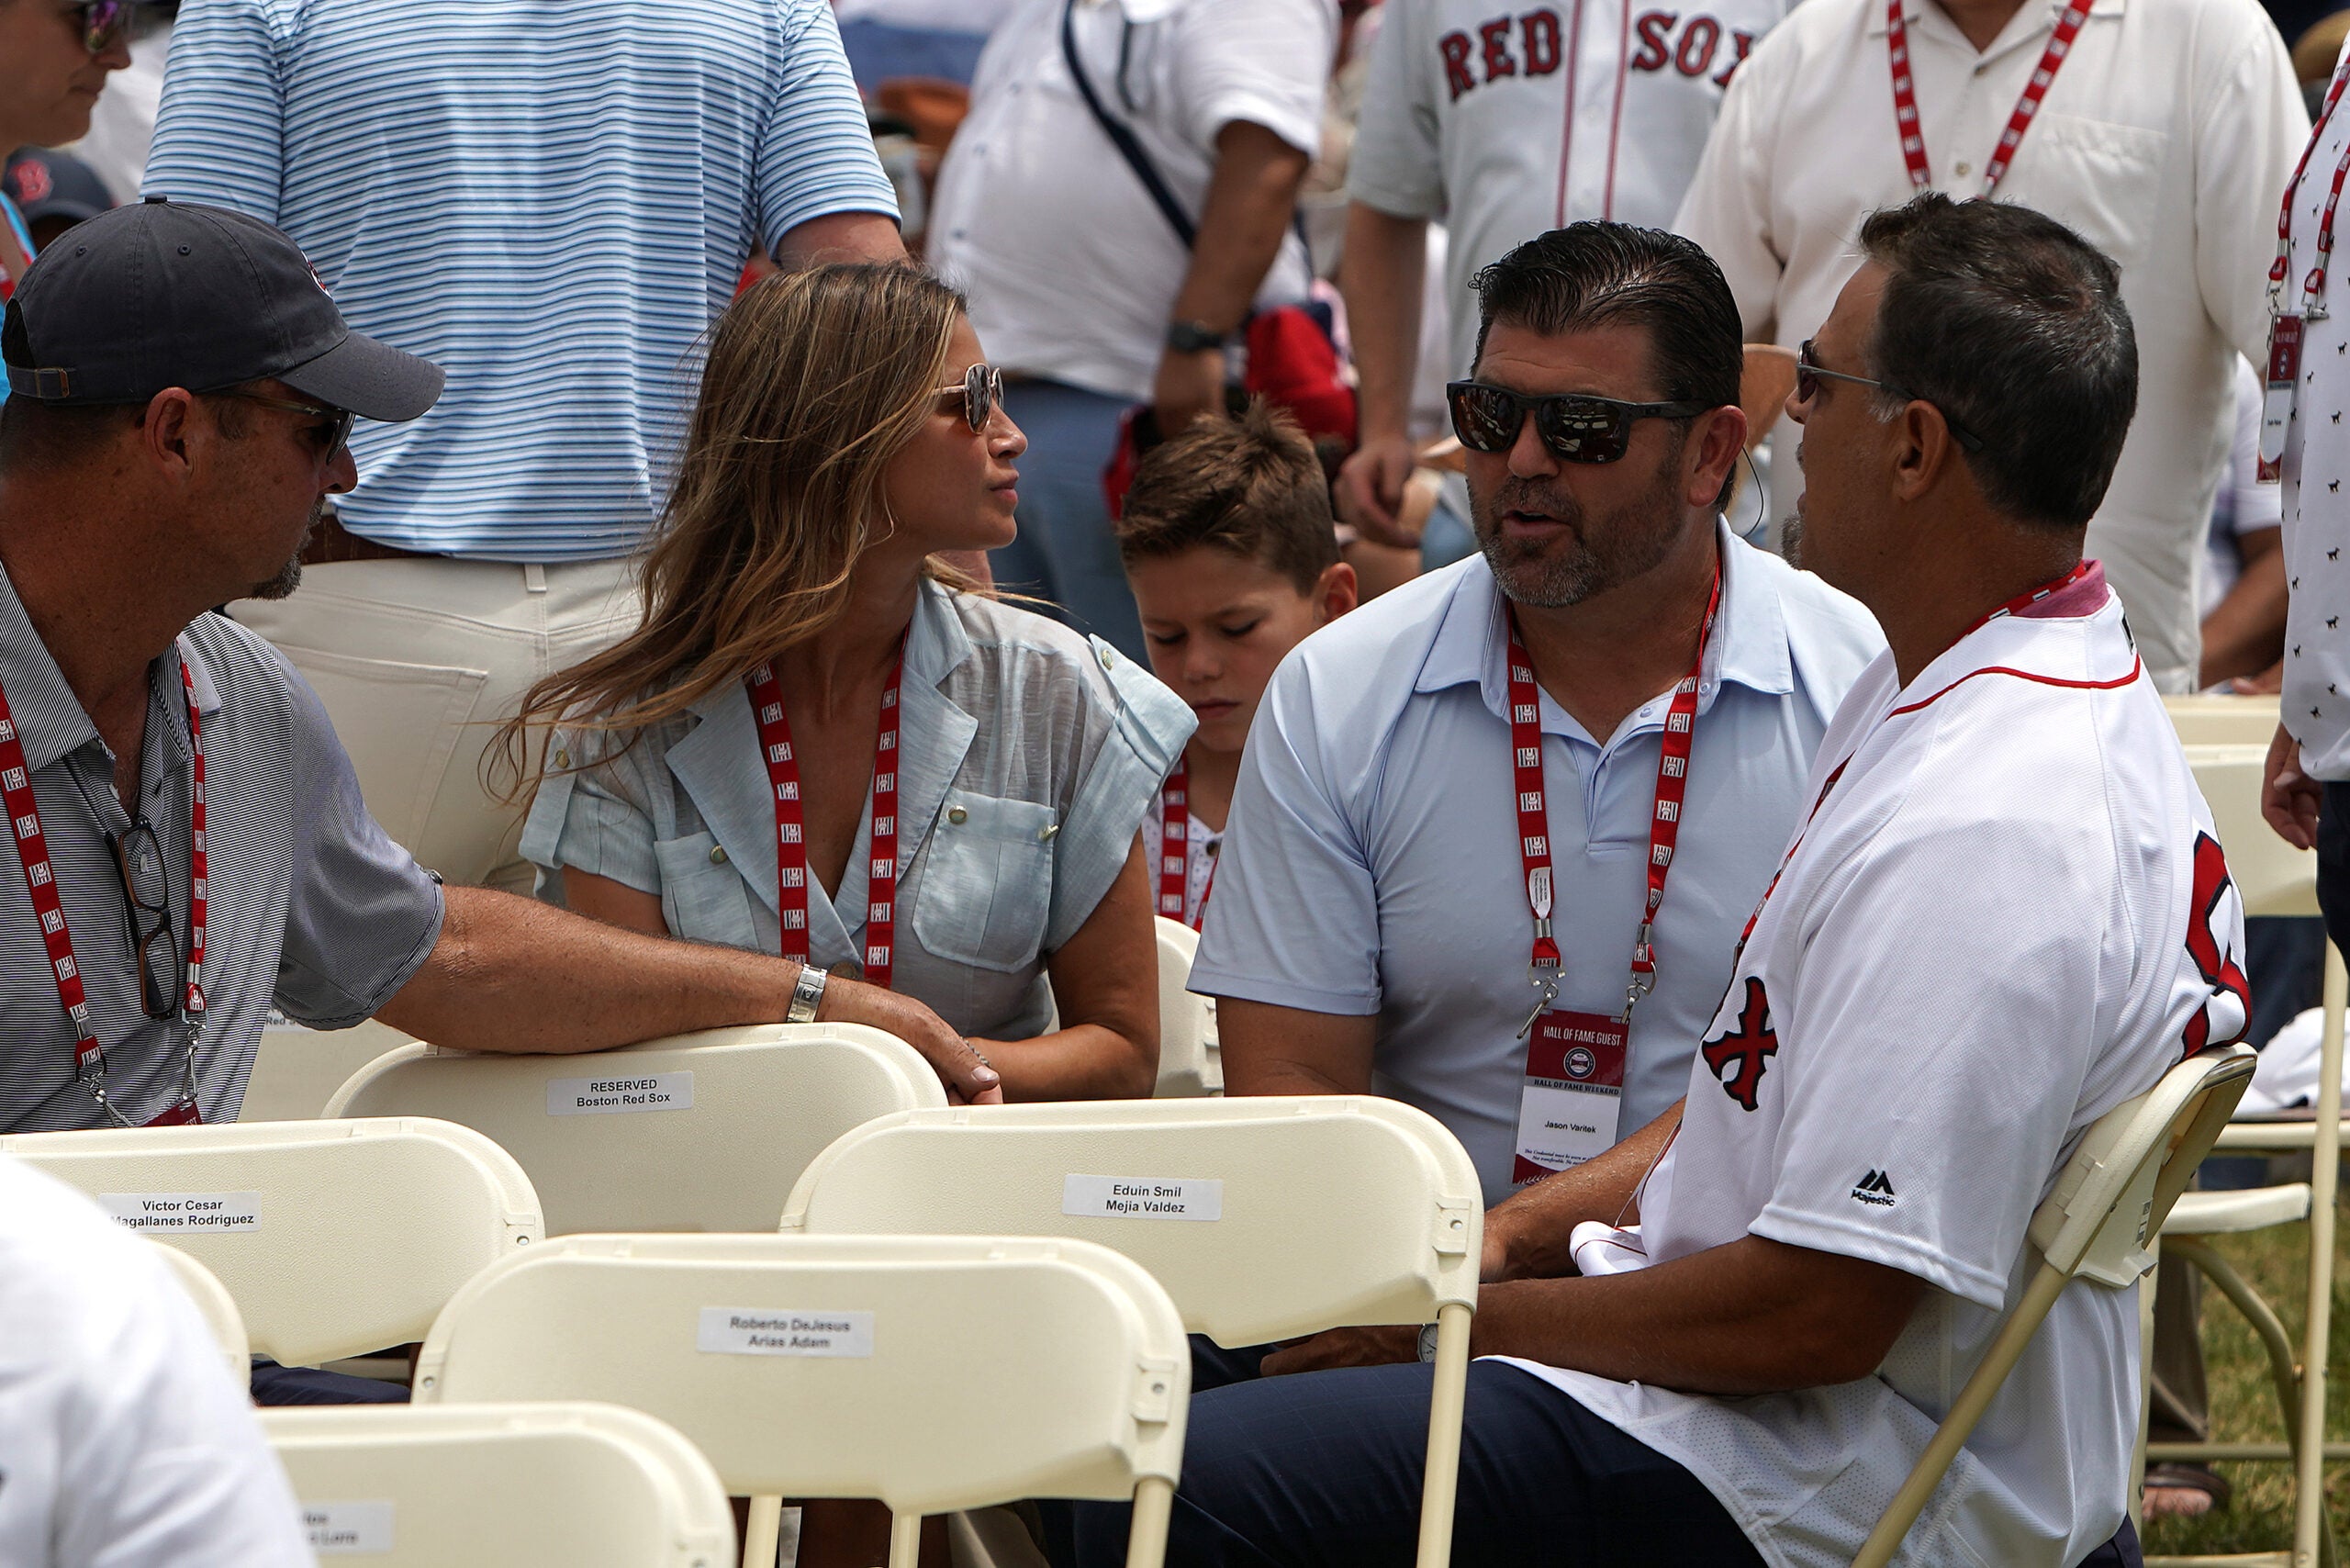 Wife of Red Sox Legend Jason Varitek Says Yankees Fan Spit on 9-Year-Old  Daughter